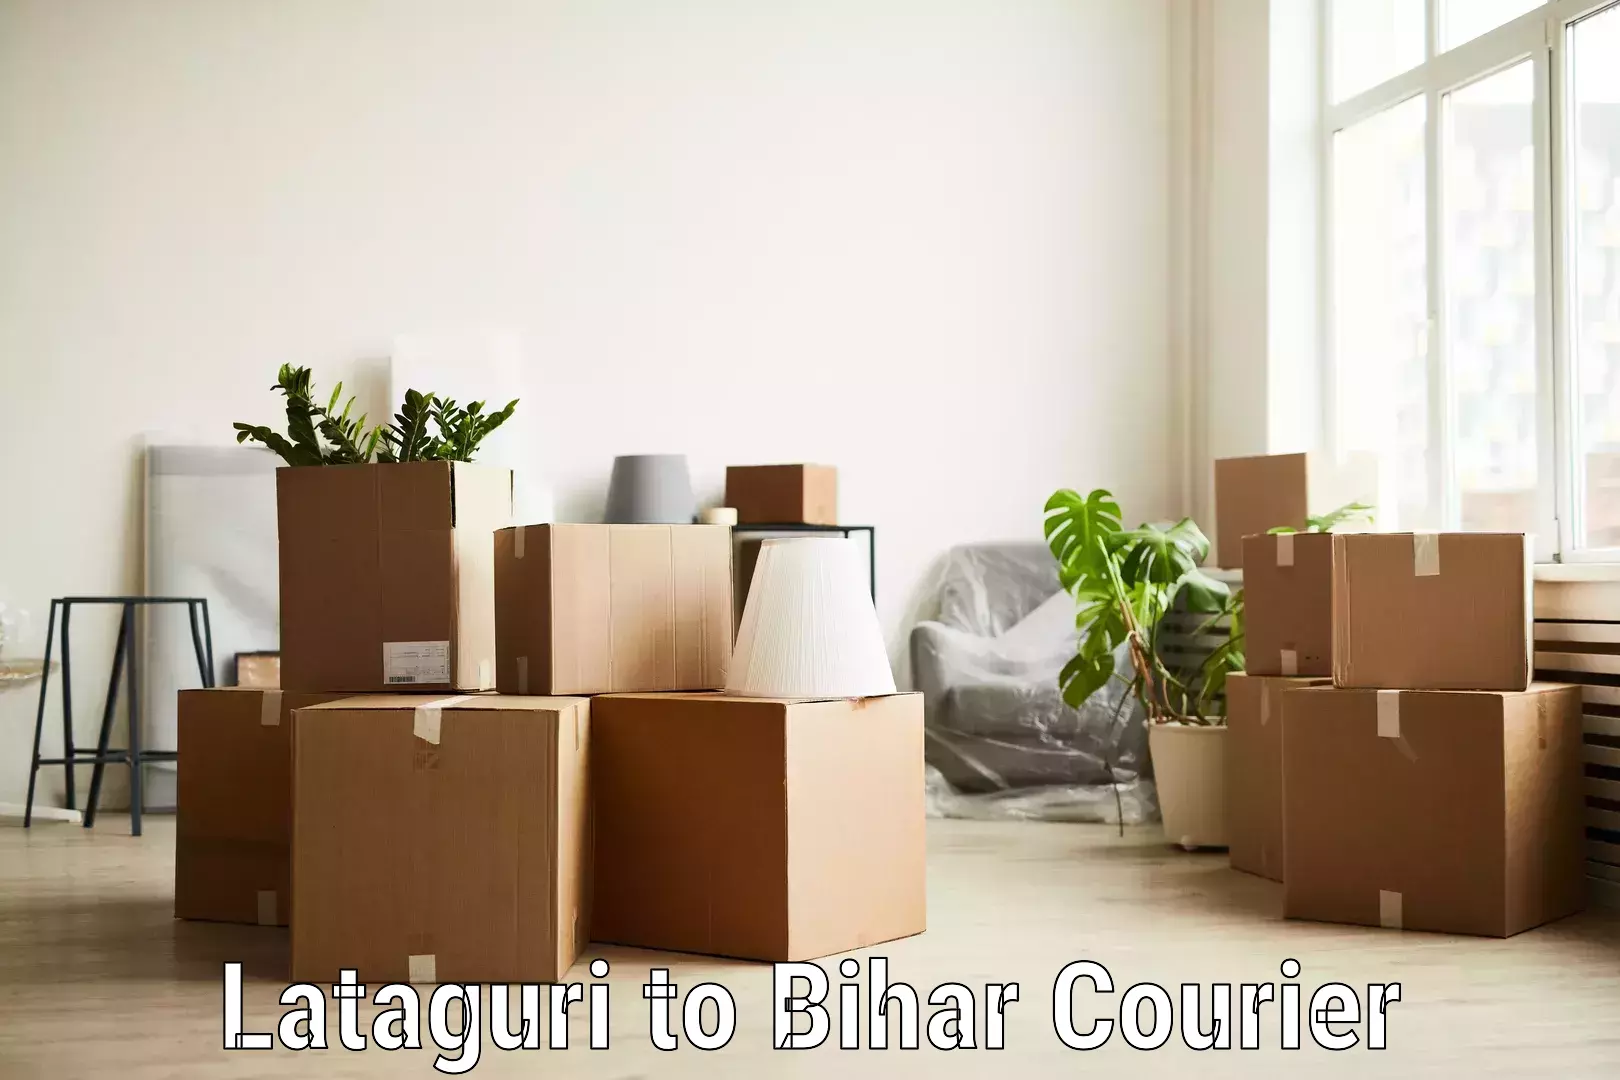 Delivery service partnership Lataguri to Bihar